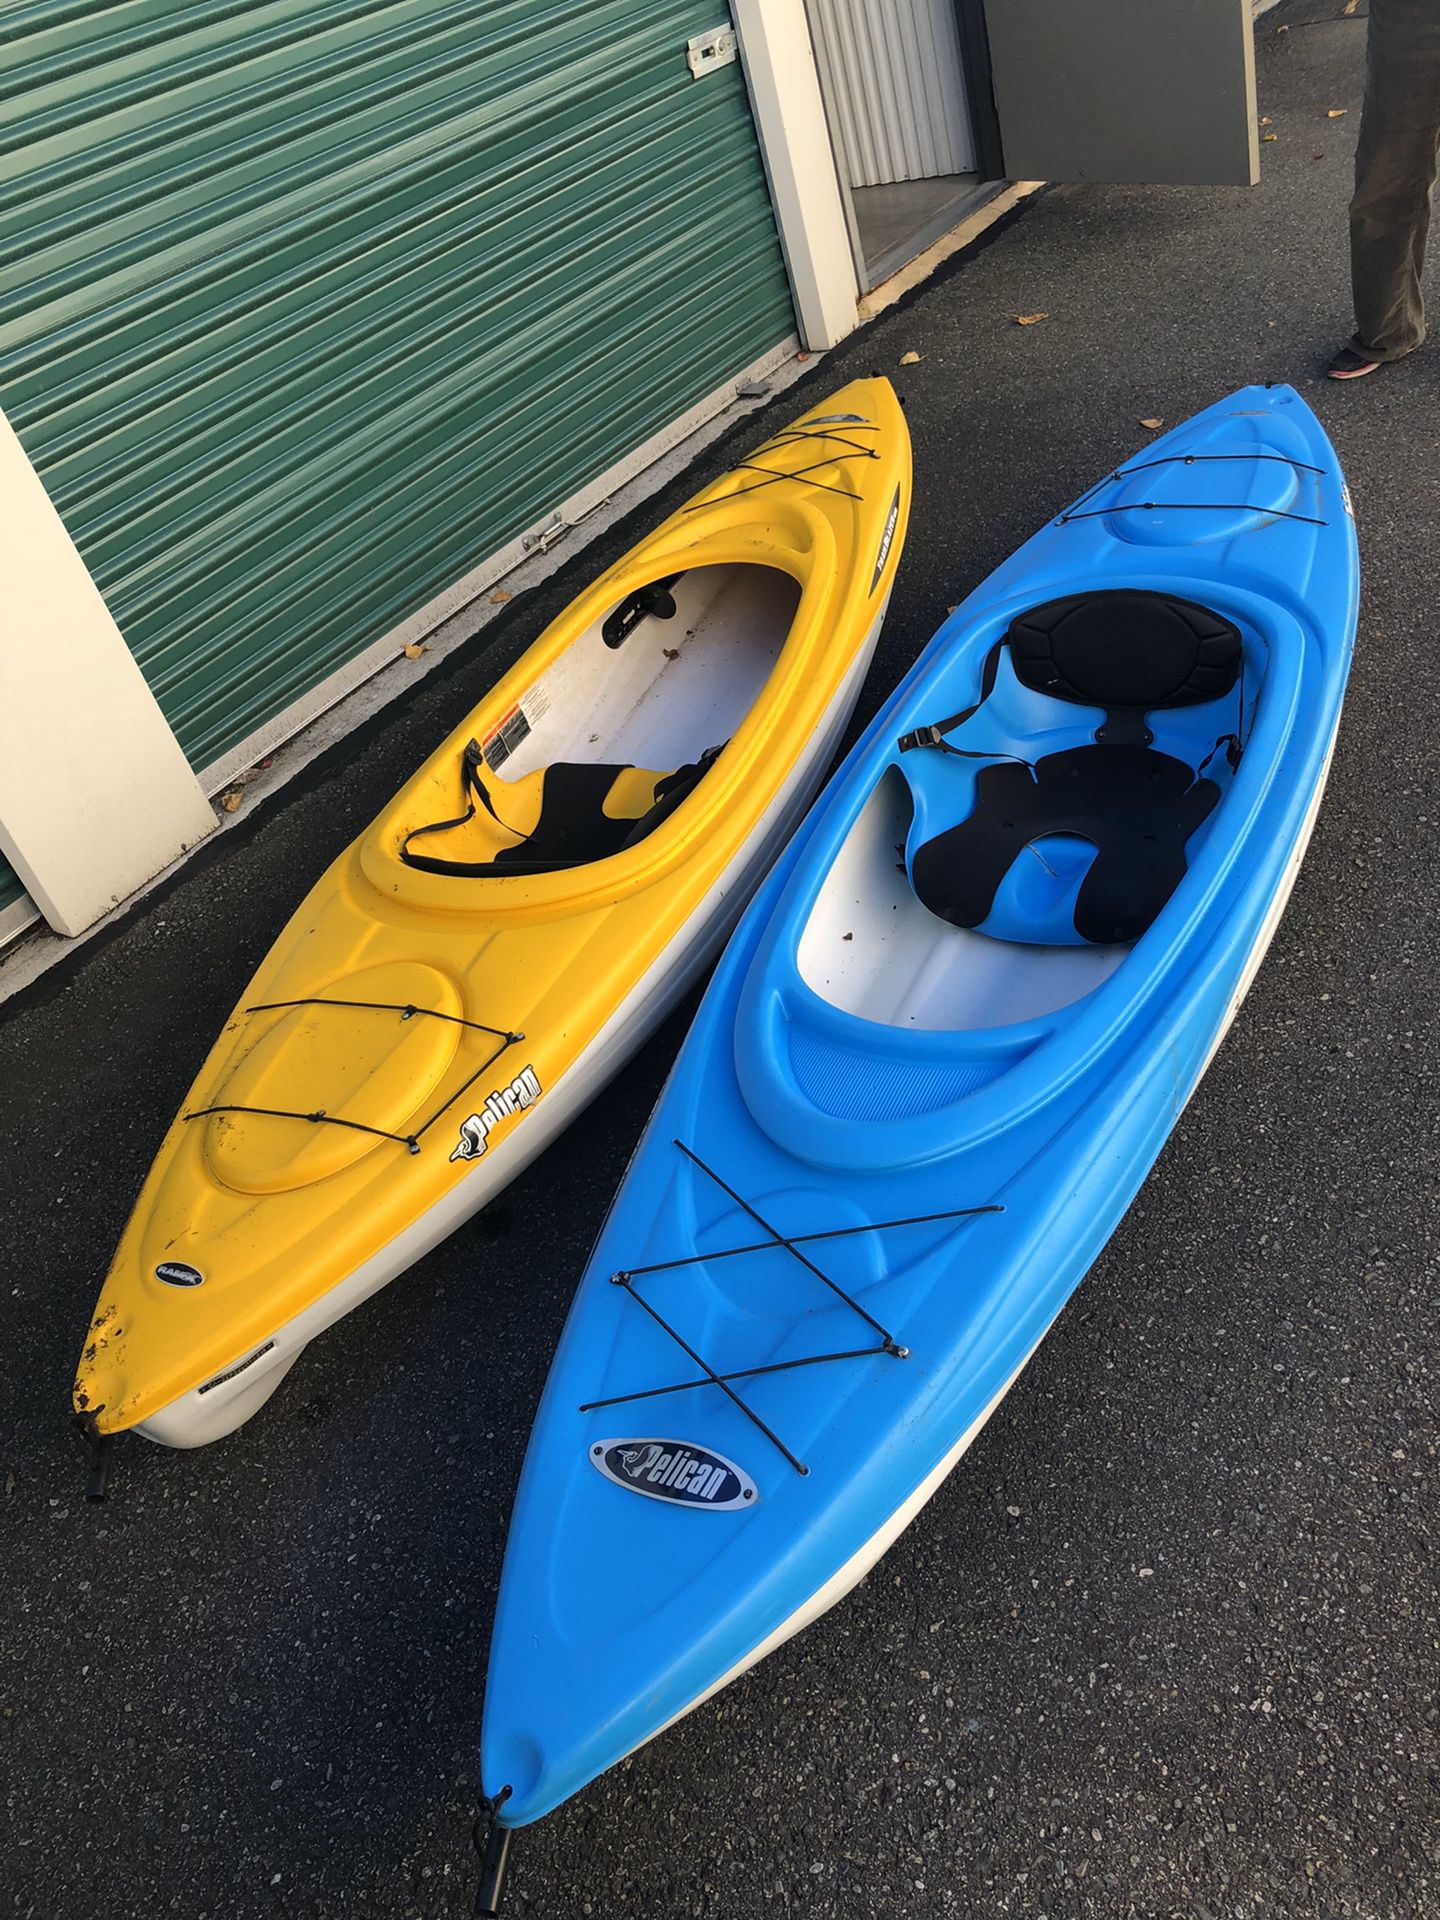 Two 10 Ft Pelican TrailBlazer 100 Kayaks with Gear